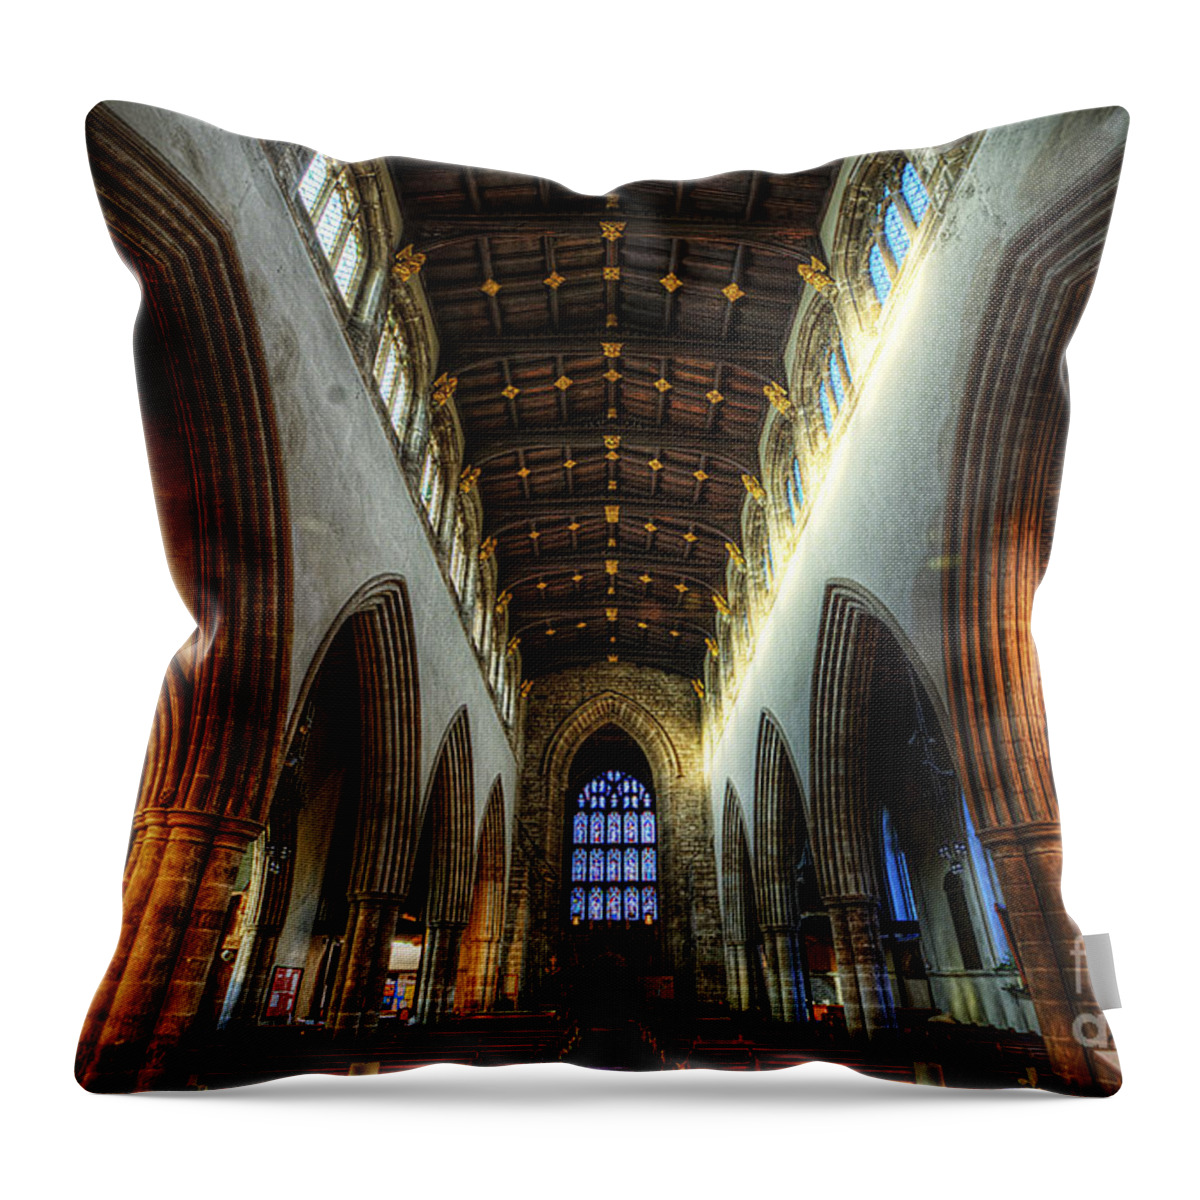 Yhun Suarez Throw Pillow featuring the photograph Loughborough Church Ceiling And Nave by Yhun Suarez